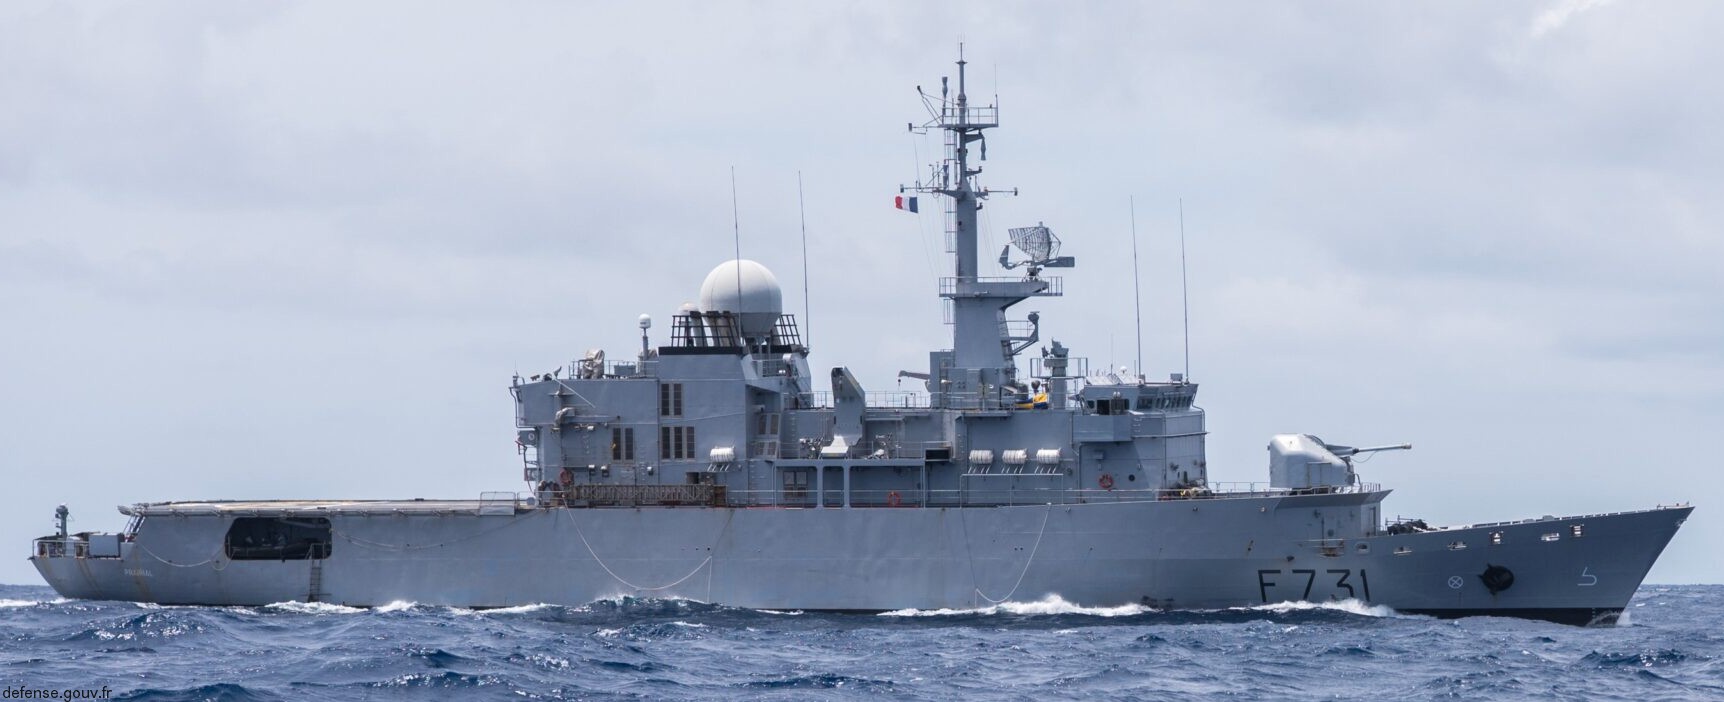 f-731 fs prairial floreal class frigate french navy marine nationale fregate surveillance 42